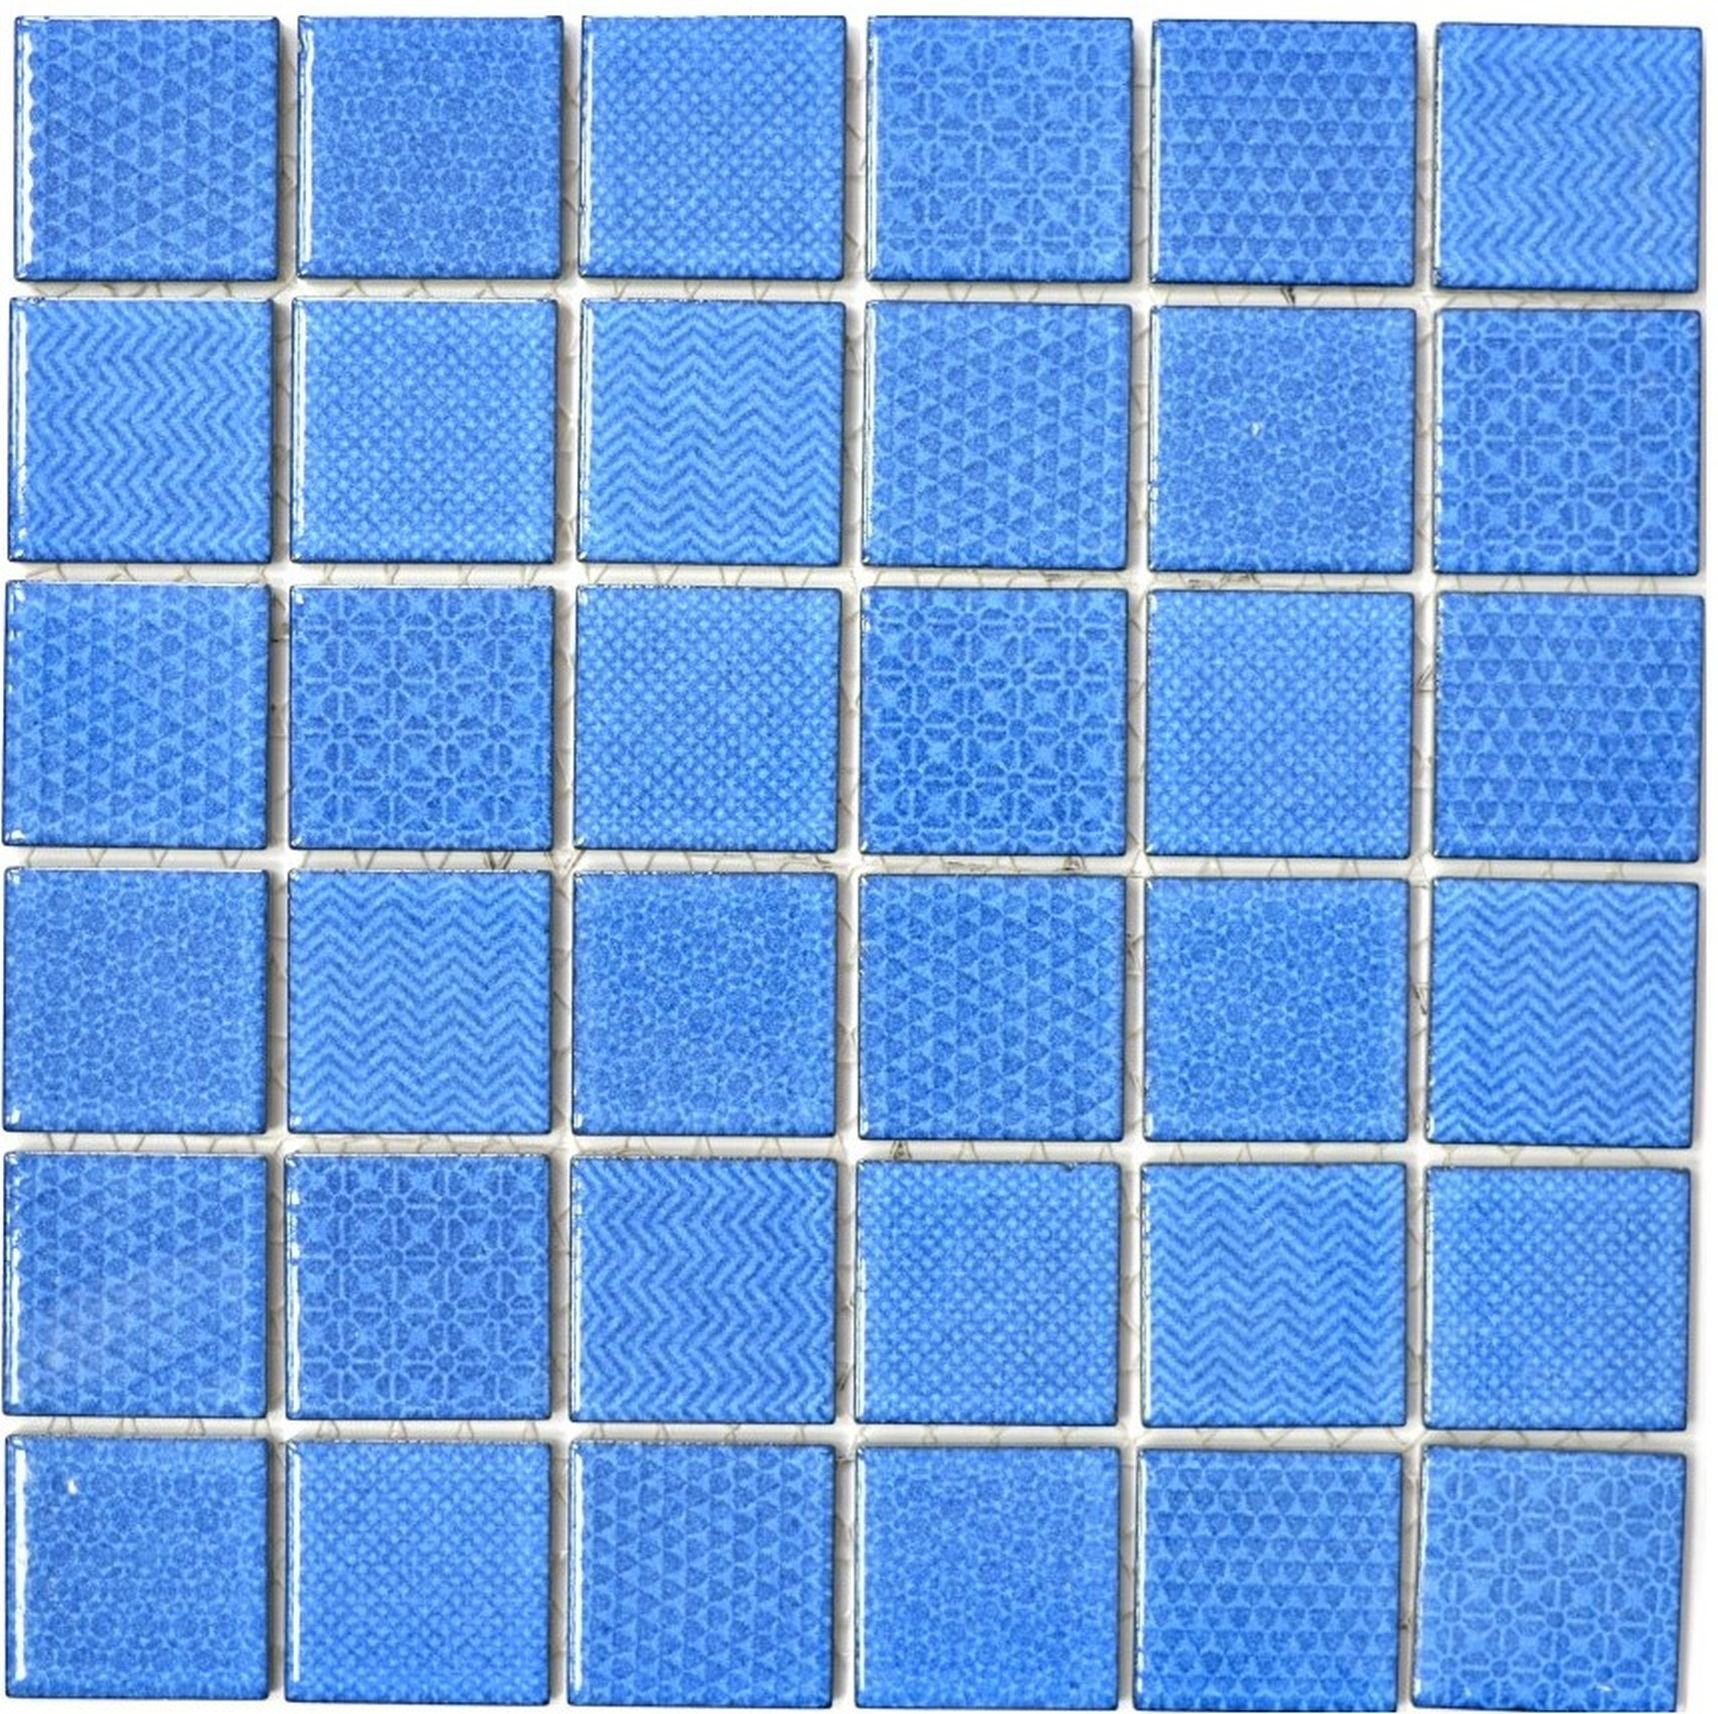 Mosani Mosaikfliesen Keramik Mosaik Fliese blau BAD Poolblau Fliesenspiegel Dusch Bad | Fliesen